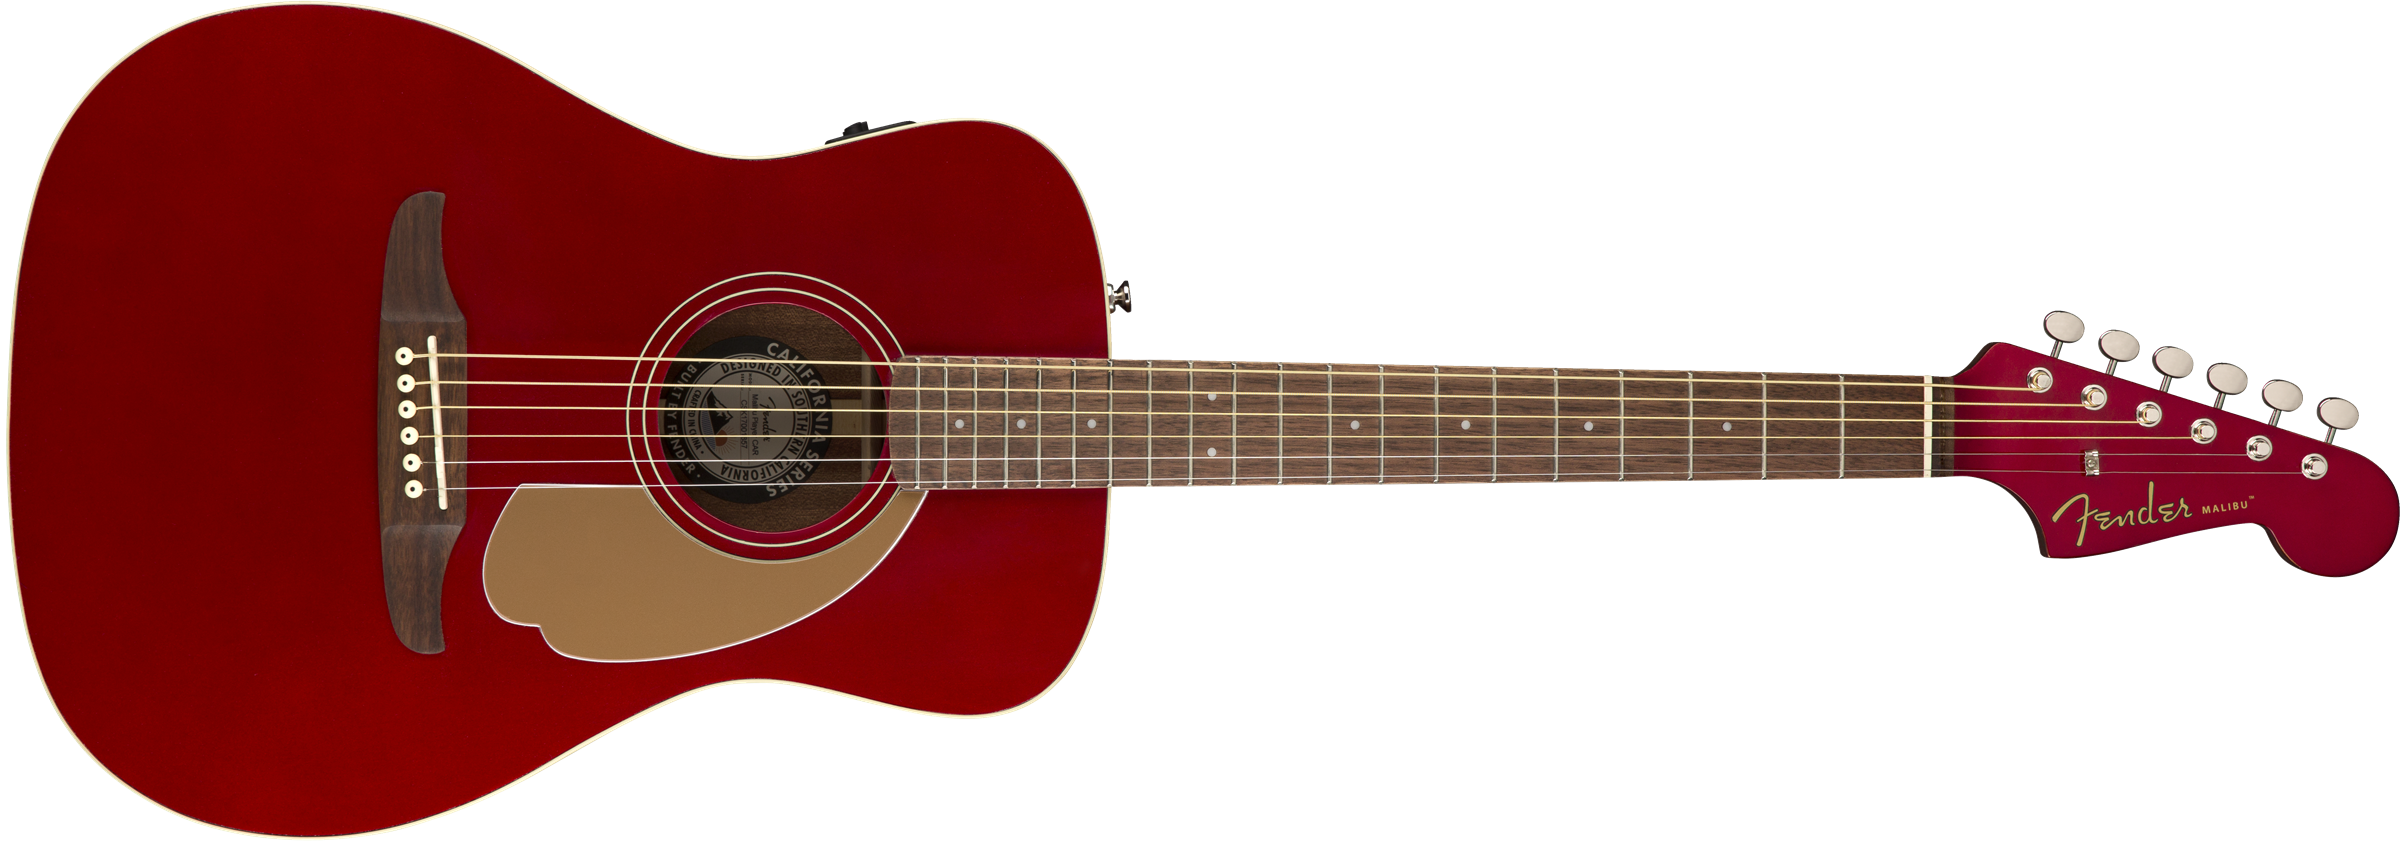 Fender Malibu Player - Candy Apple Red - Westerngitarre & electro - Variation 1